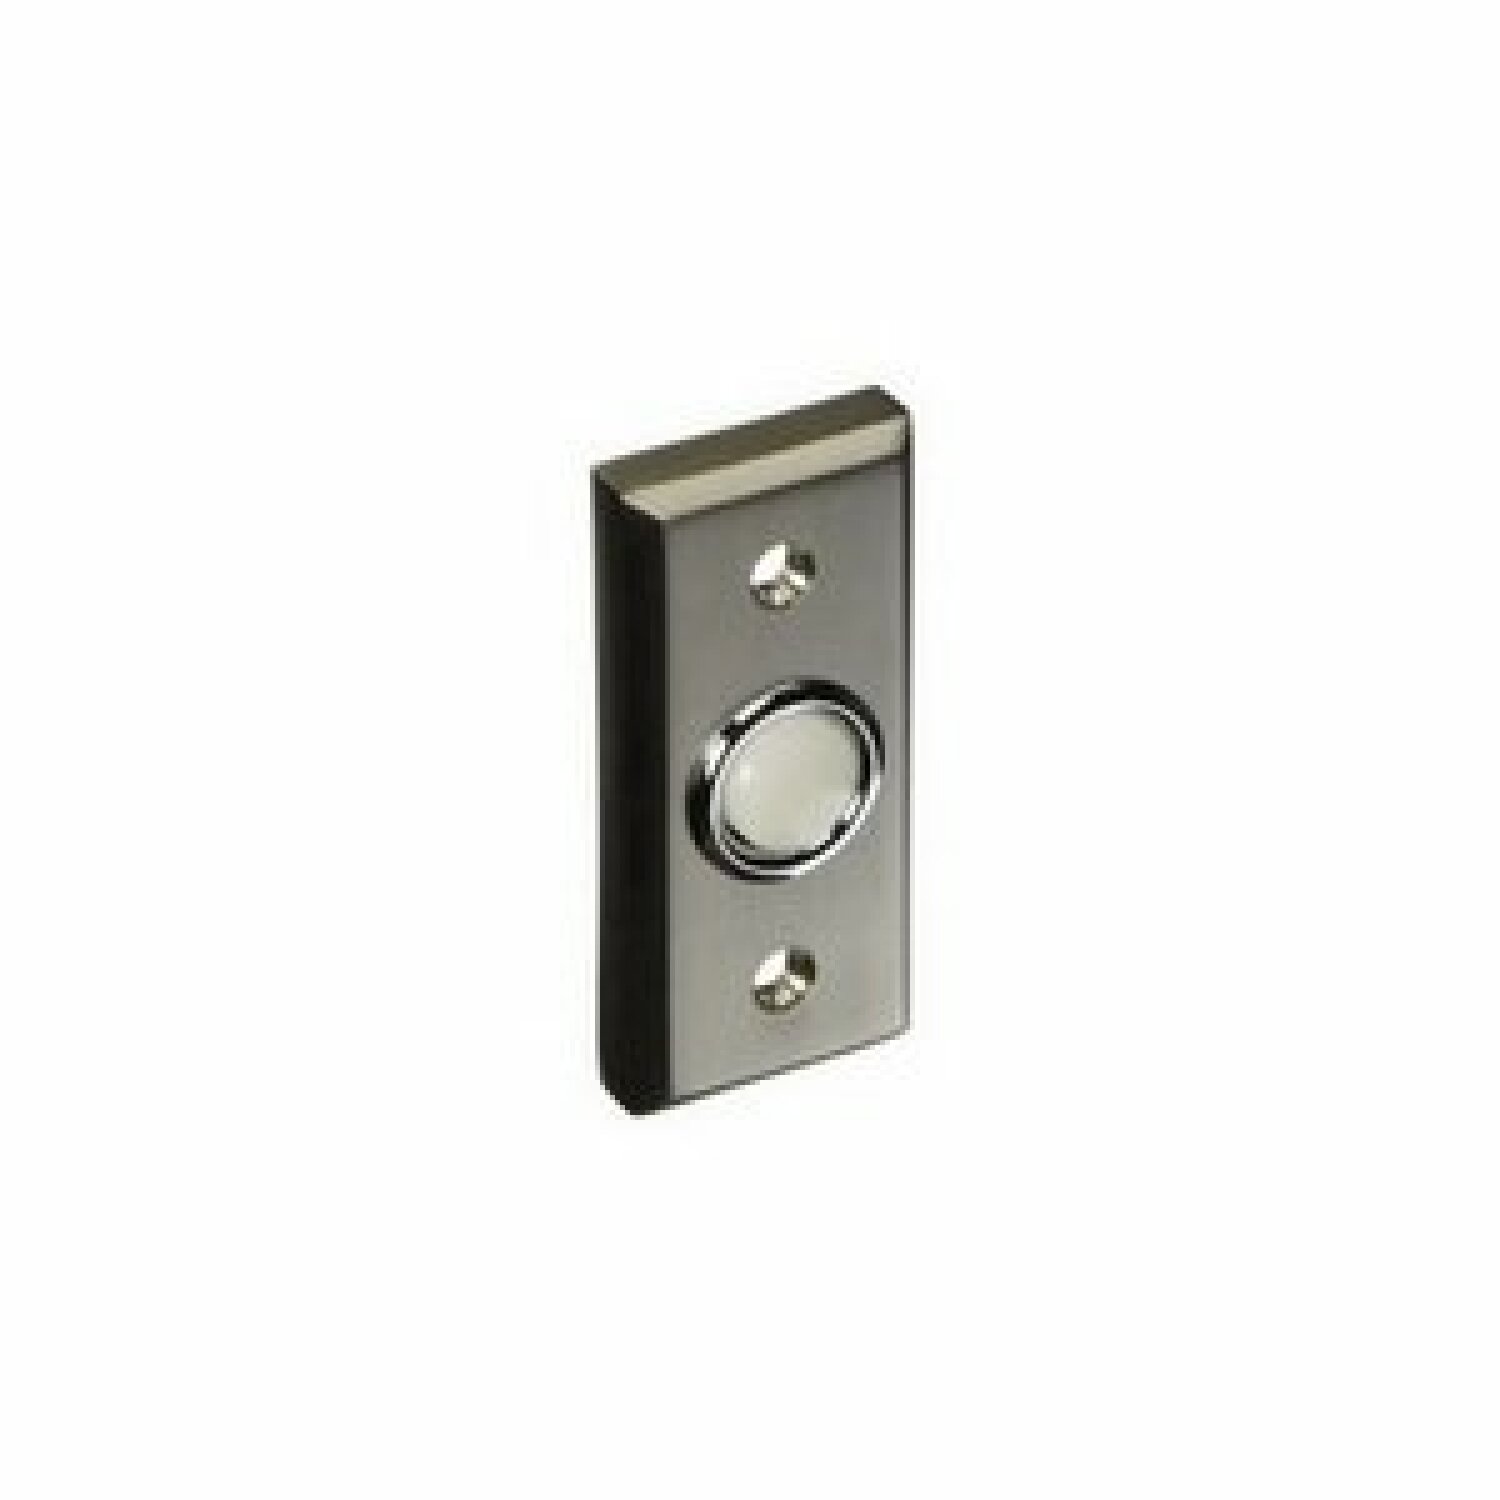 <a href="https://moderndigz.com/Mission doorbell button" target="_blank" rel="noopener nofollow">Mission doorbell button</a>